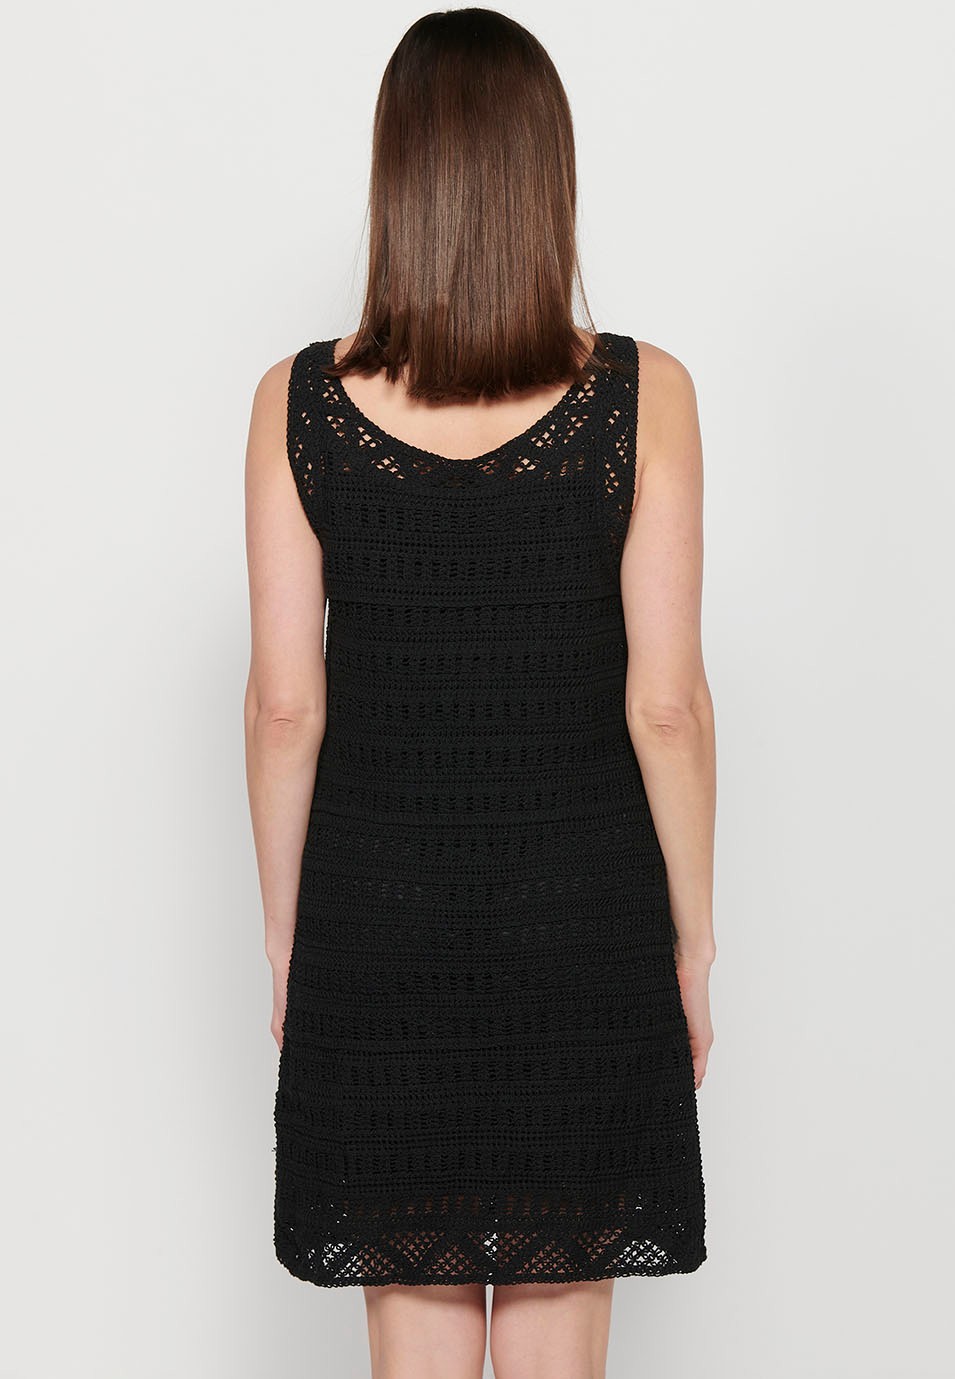 Vestido corto de tirantes con Tela tricot con forro de Color Negro para Mujer 4